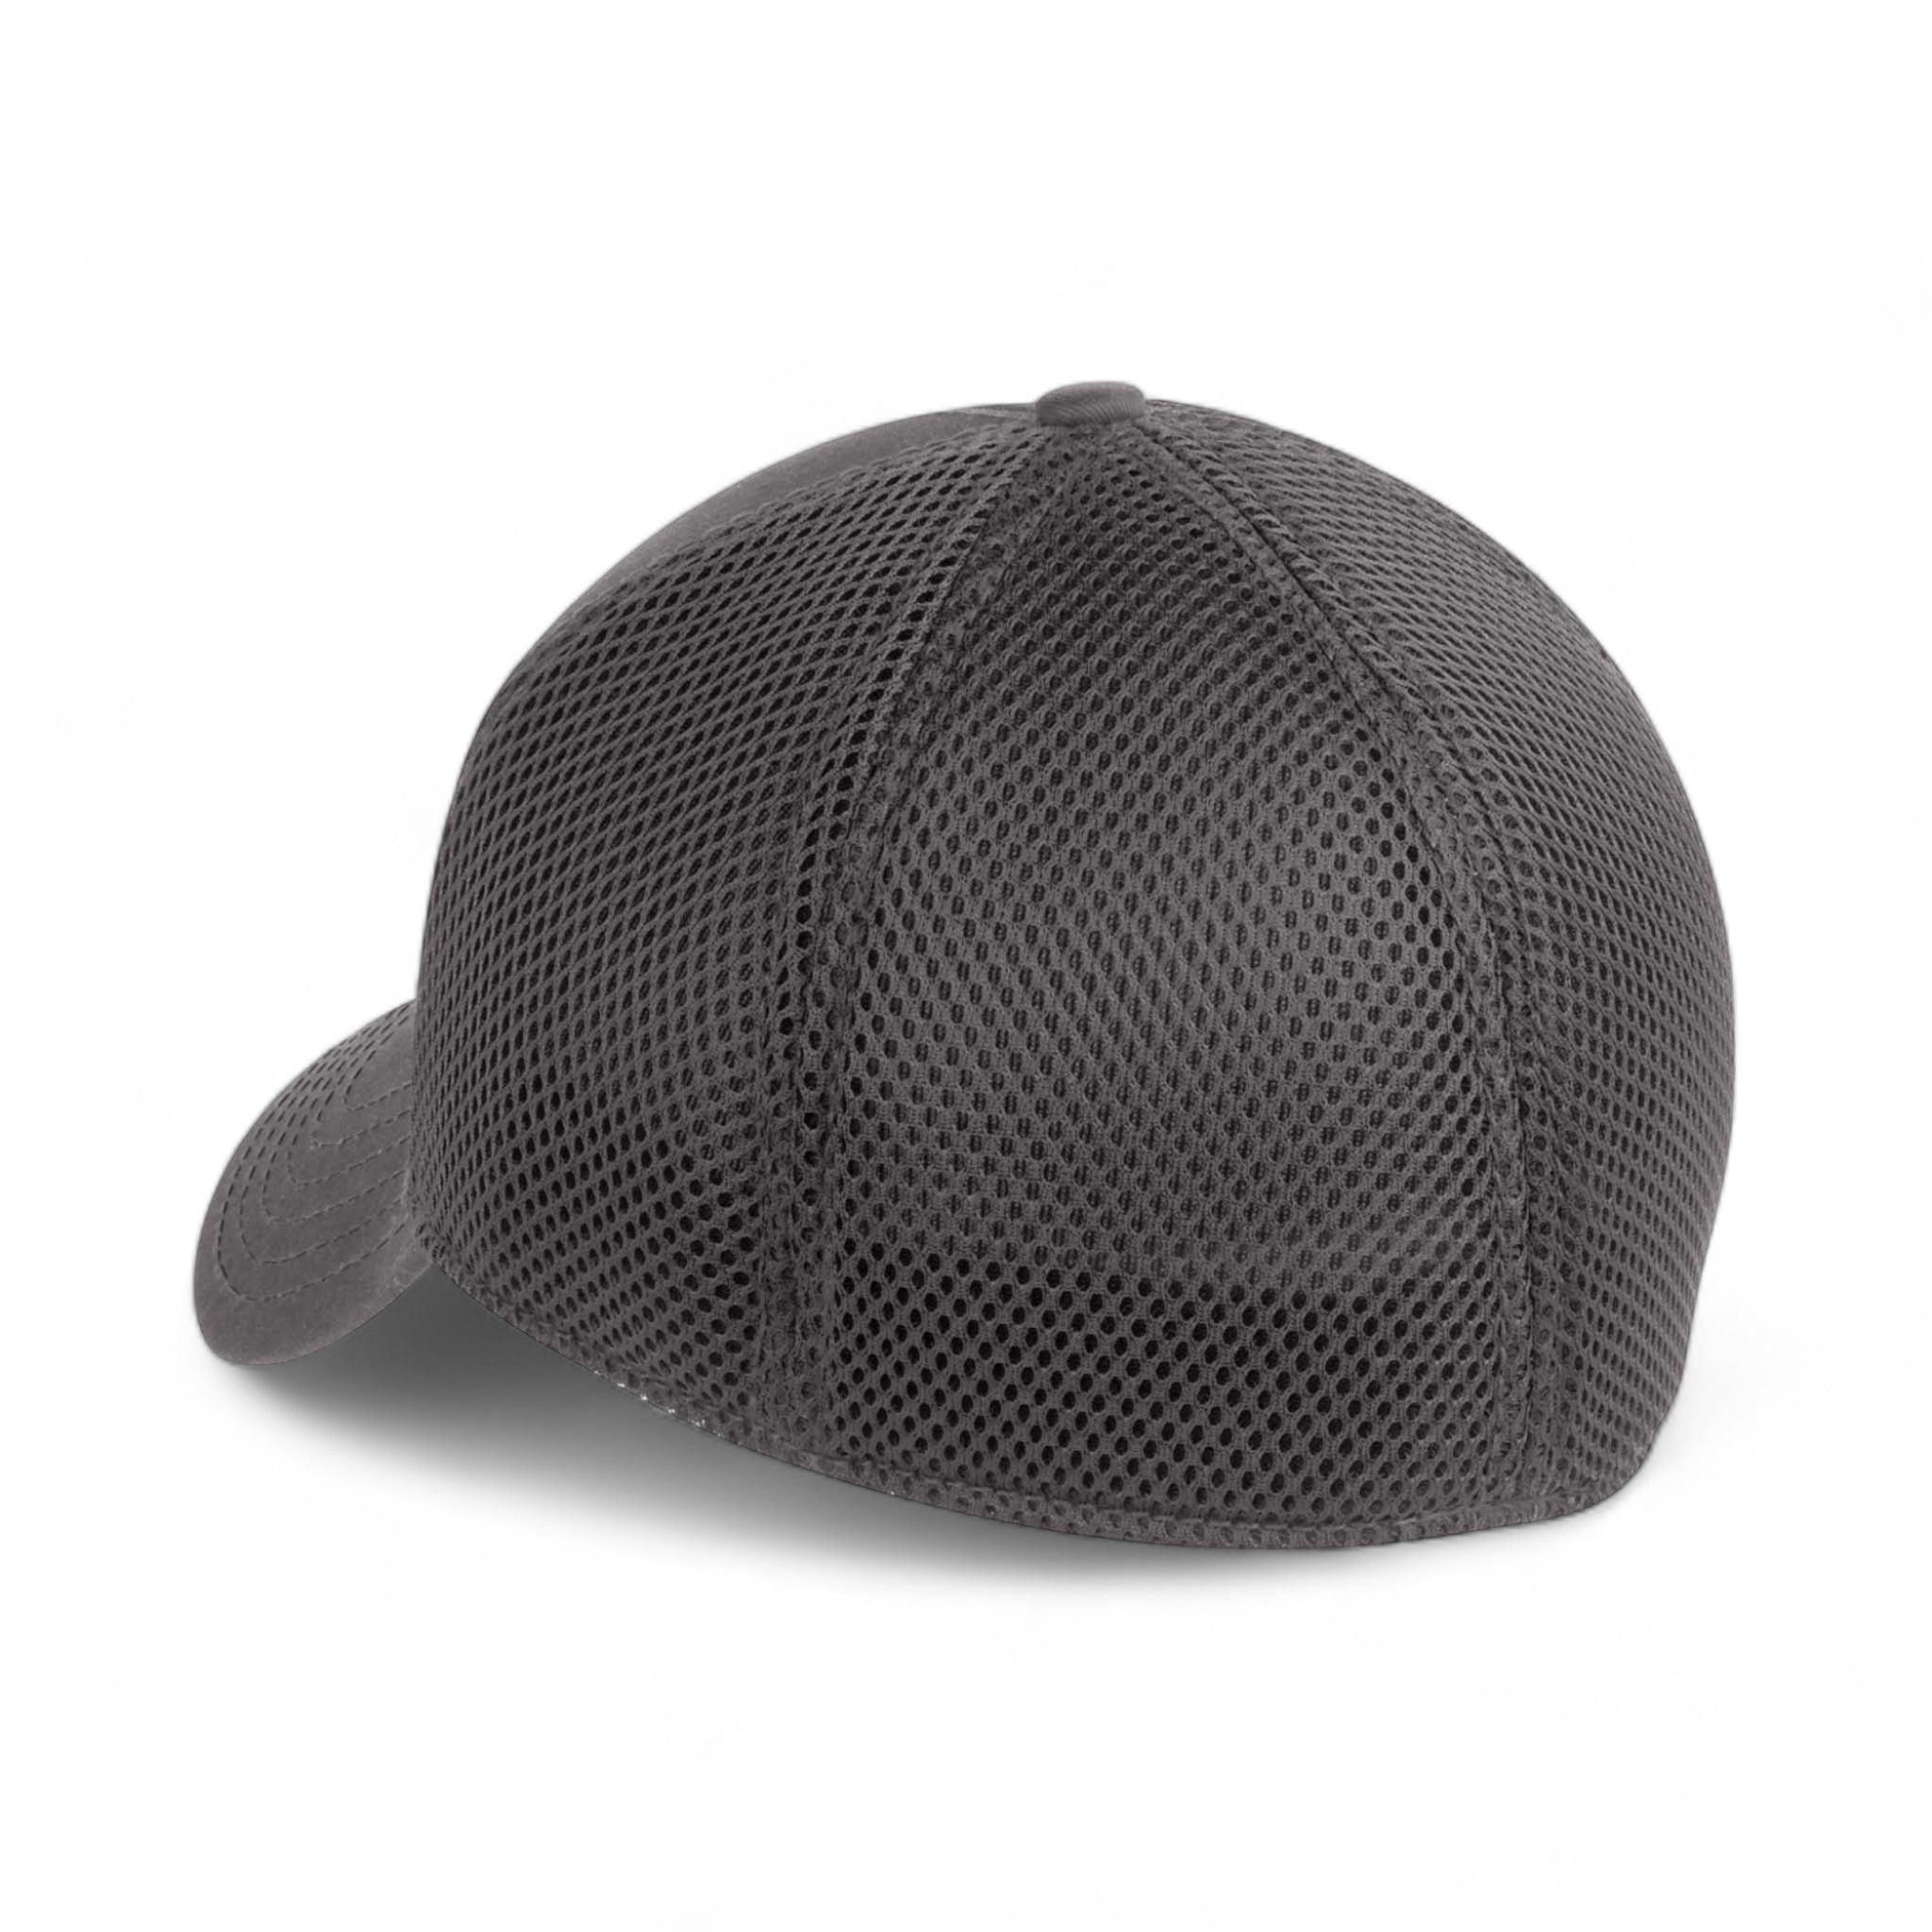 Back view of New Era NE1020 custom hat in charcoal and charcoal